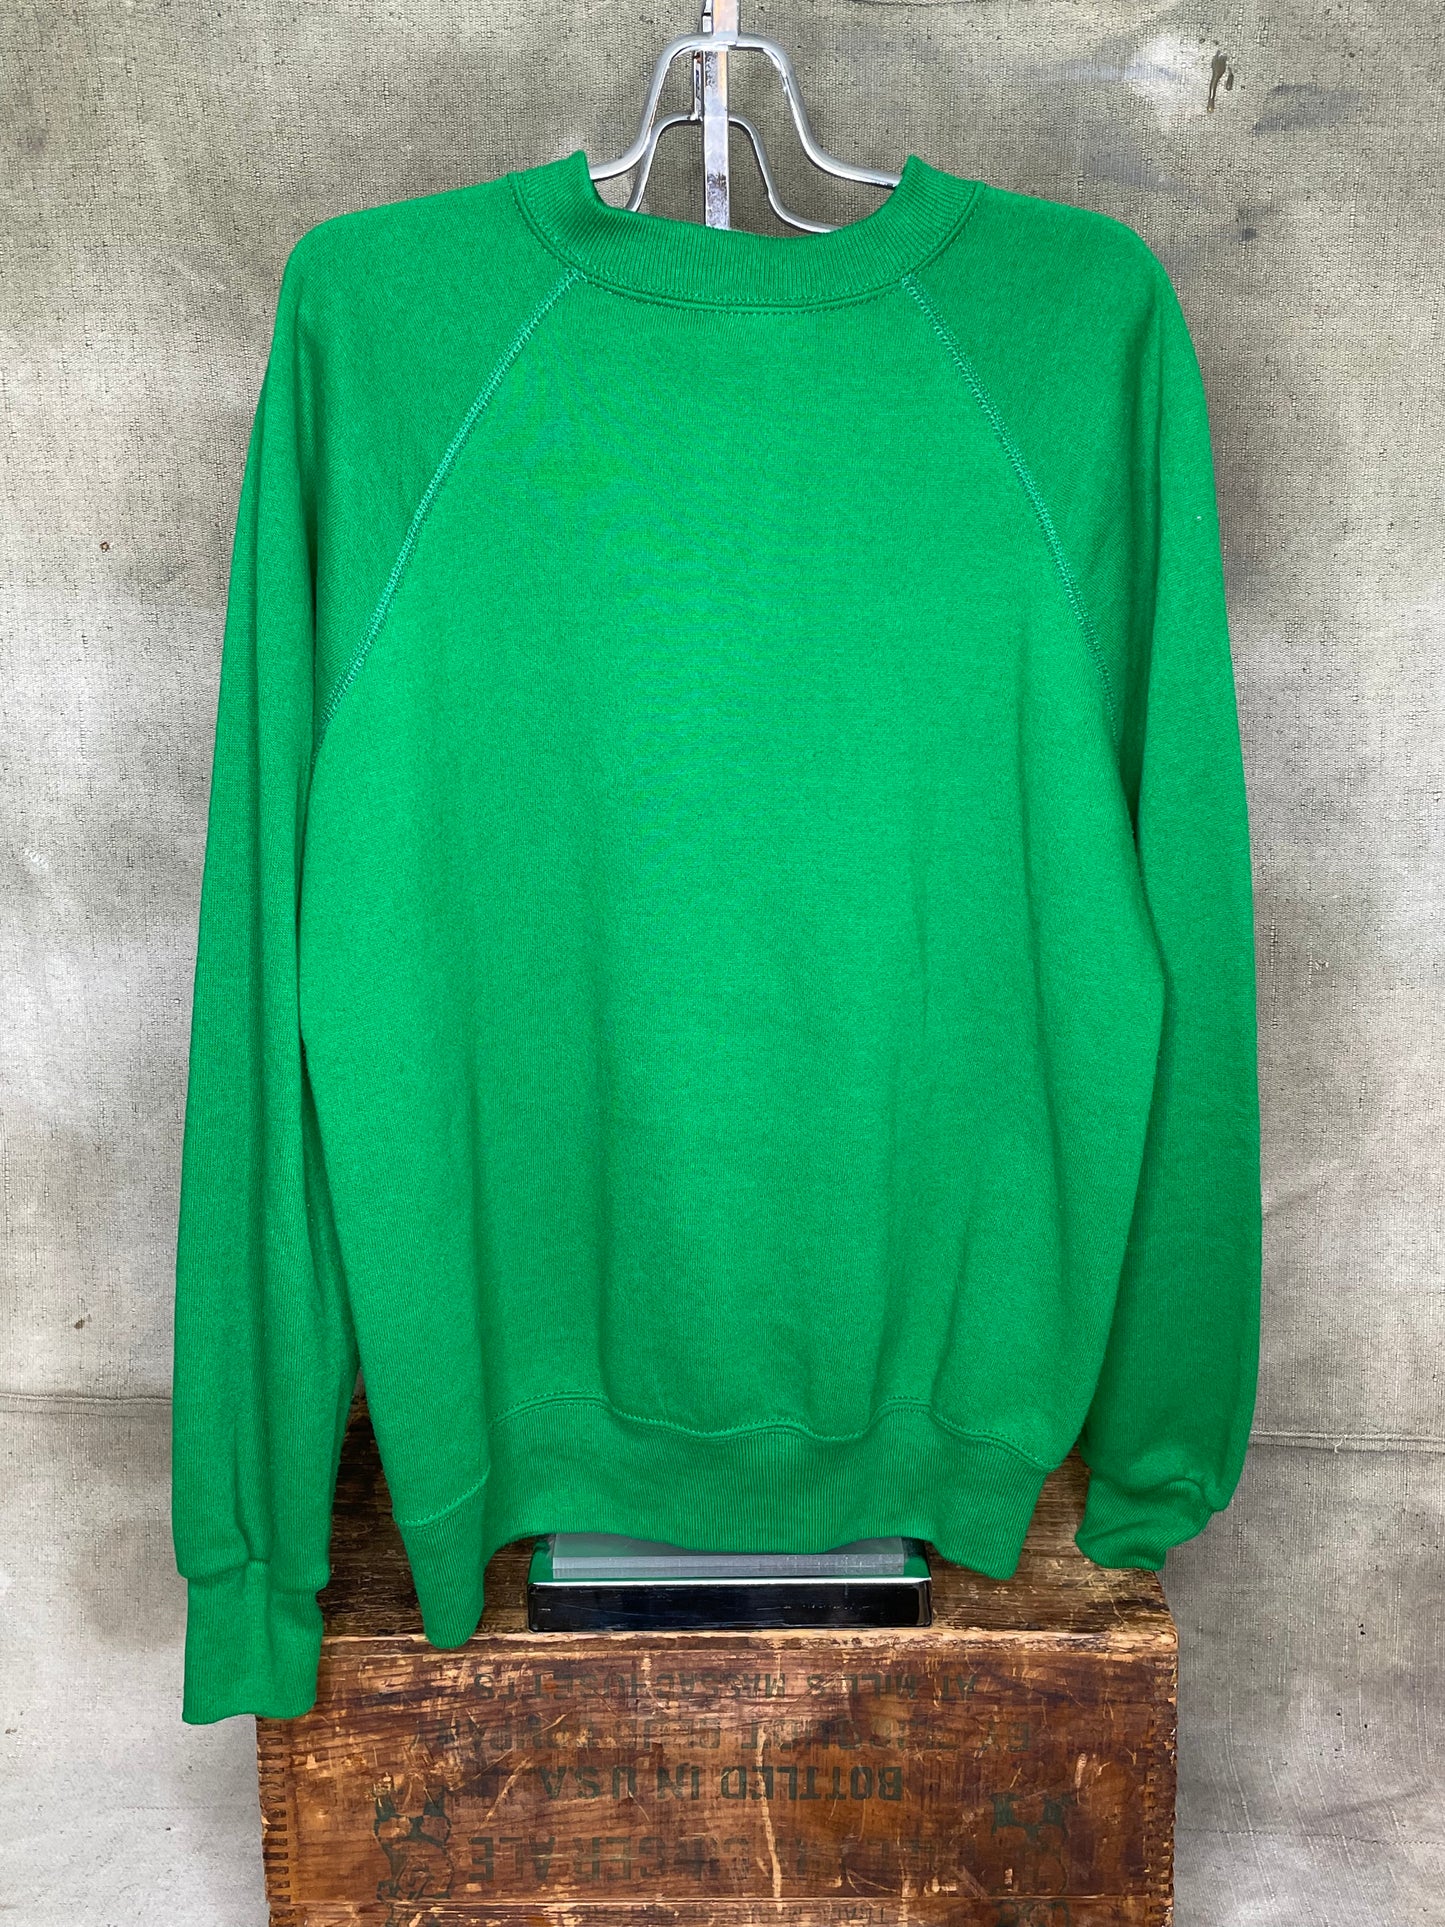 Vintage M/L St Patrick’s Day Molly-O  Crewneck Sweatshirt